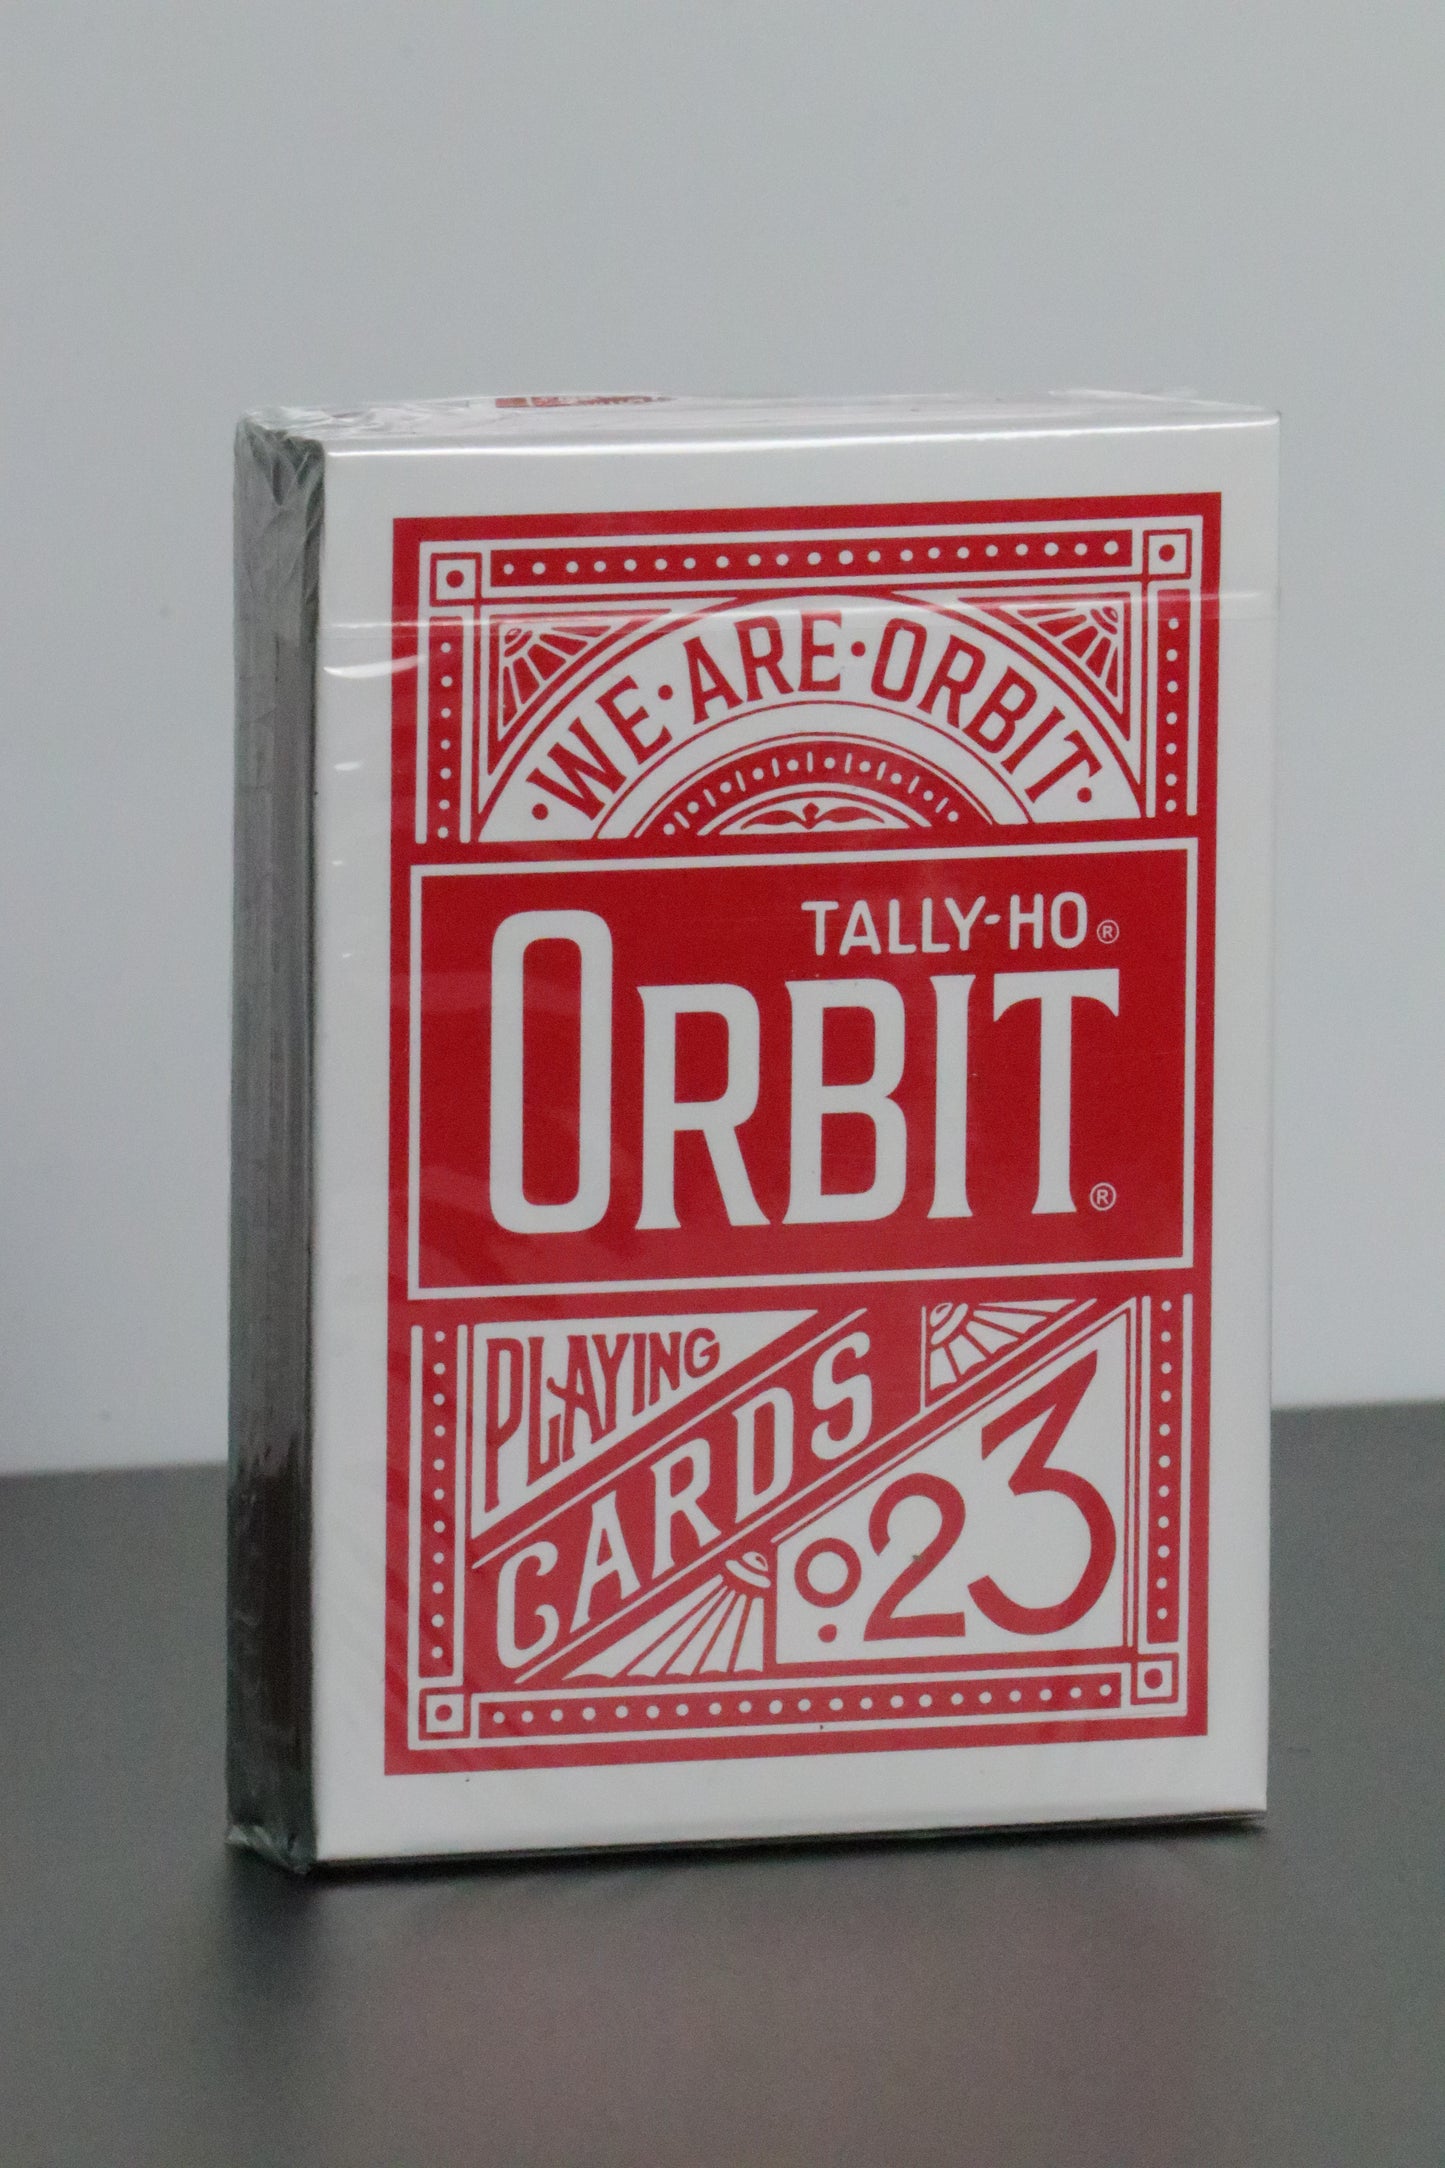 Orbit Tally Ho Card Con Red Seal